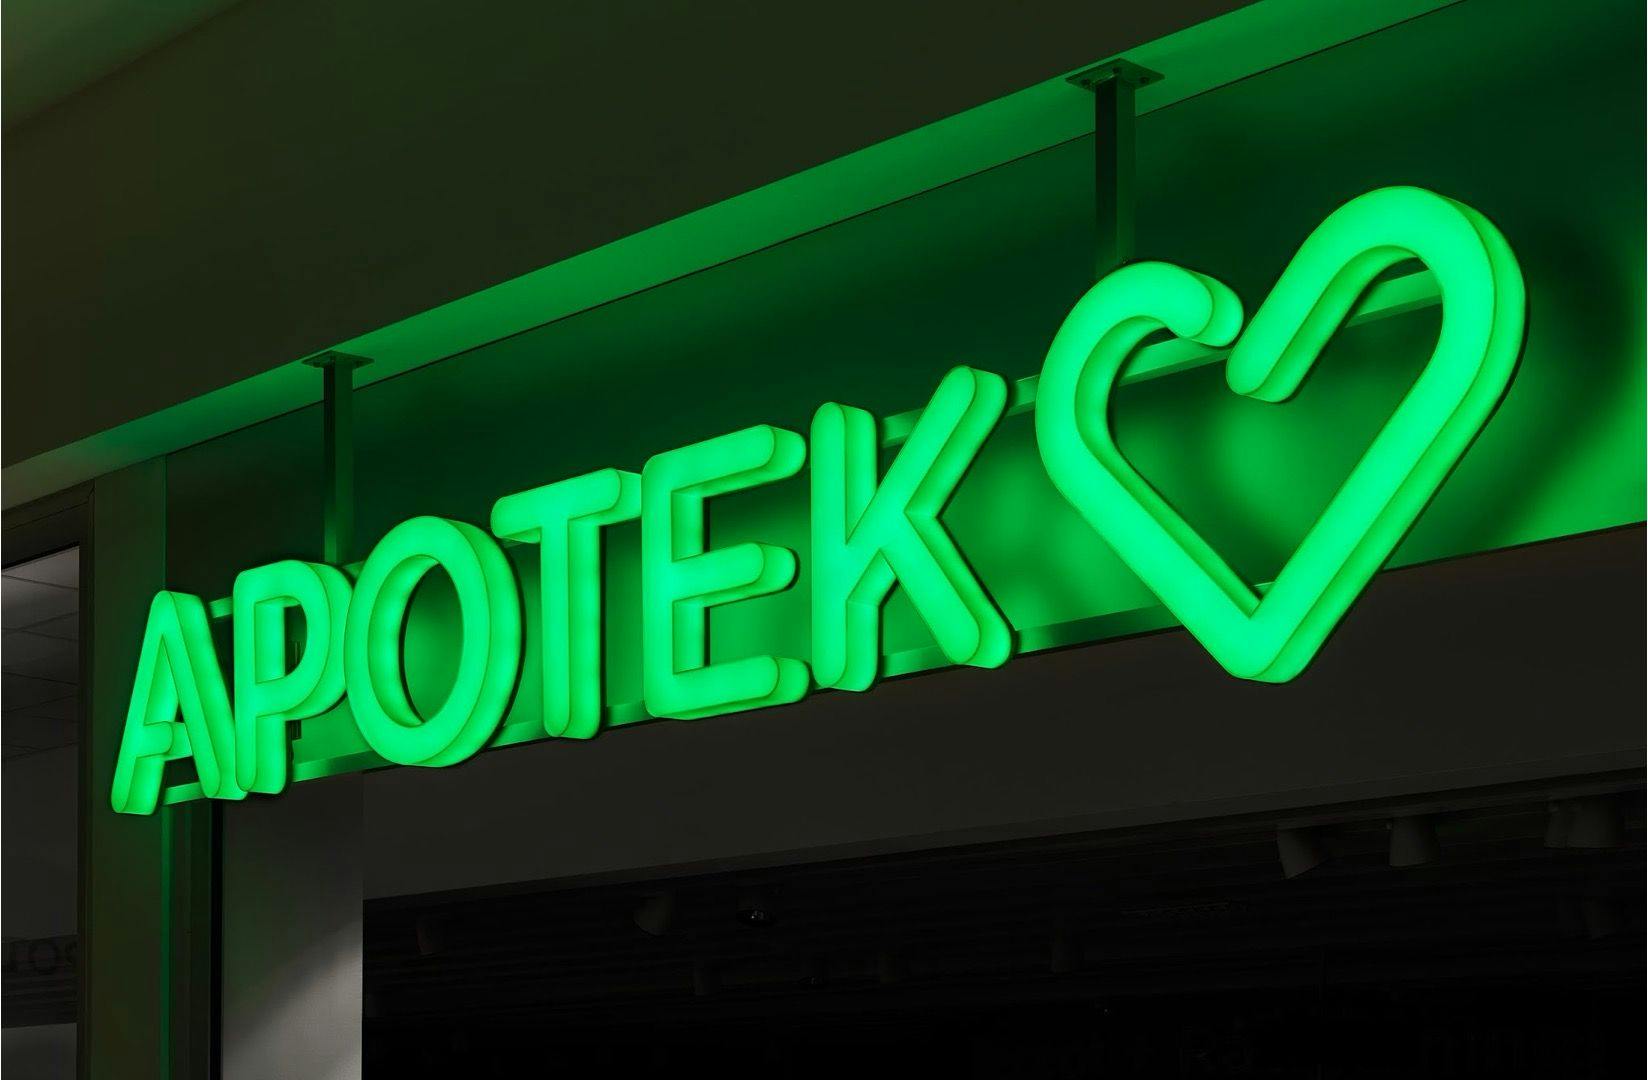 Neon 'APOTEK' sign with a heart, representing Apotek Hjärtat.